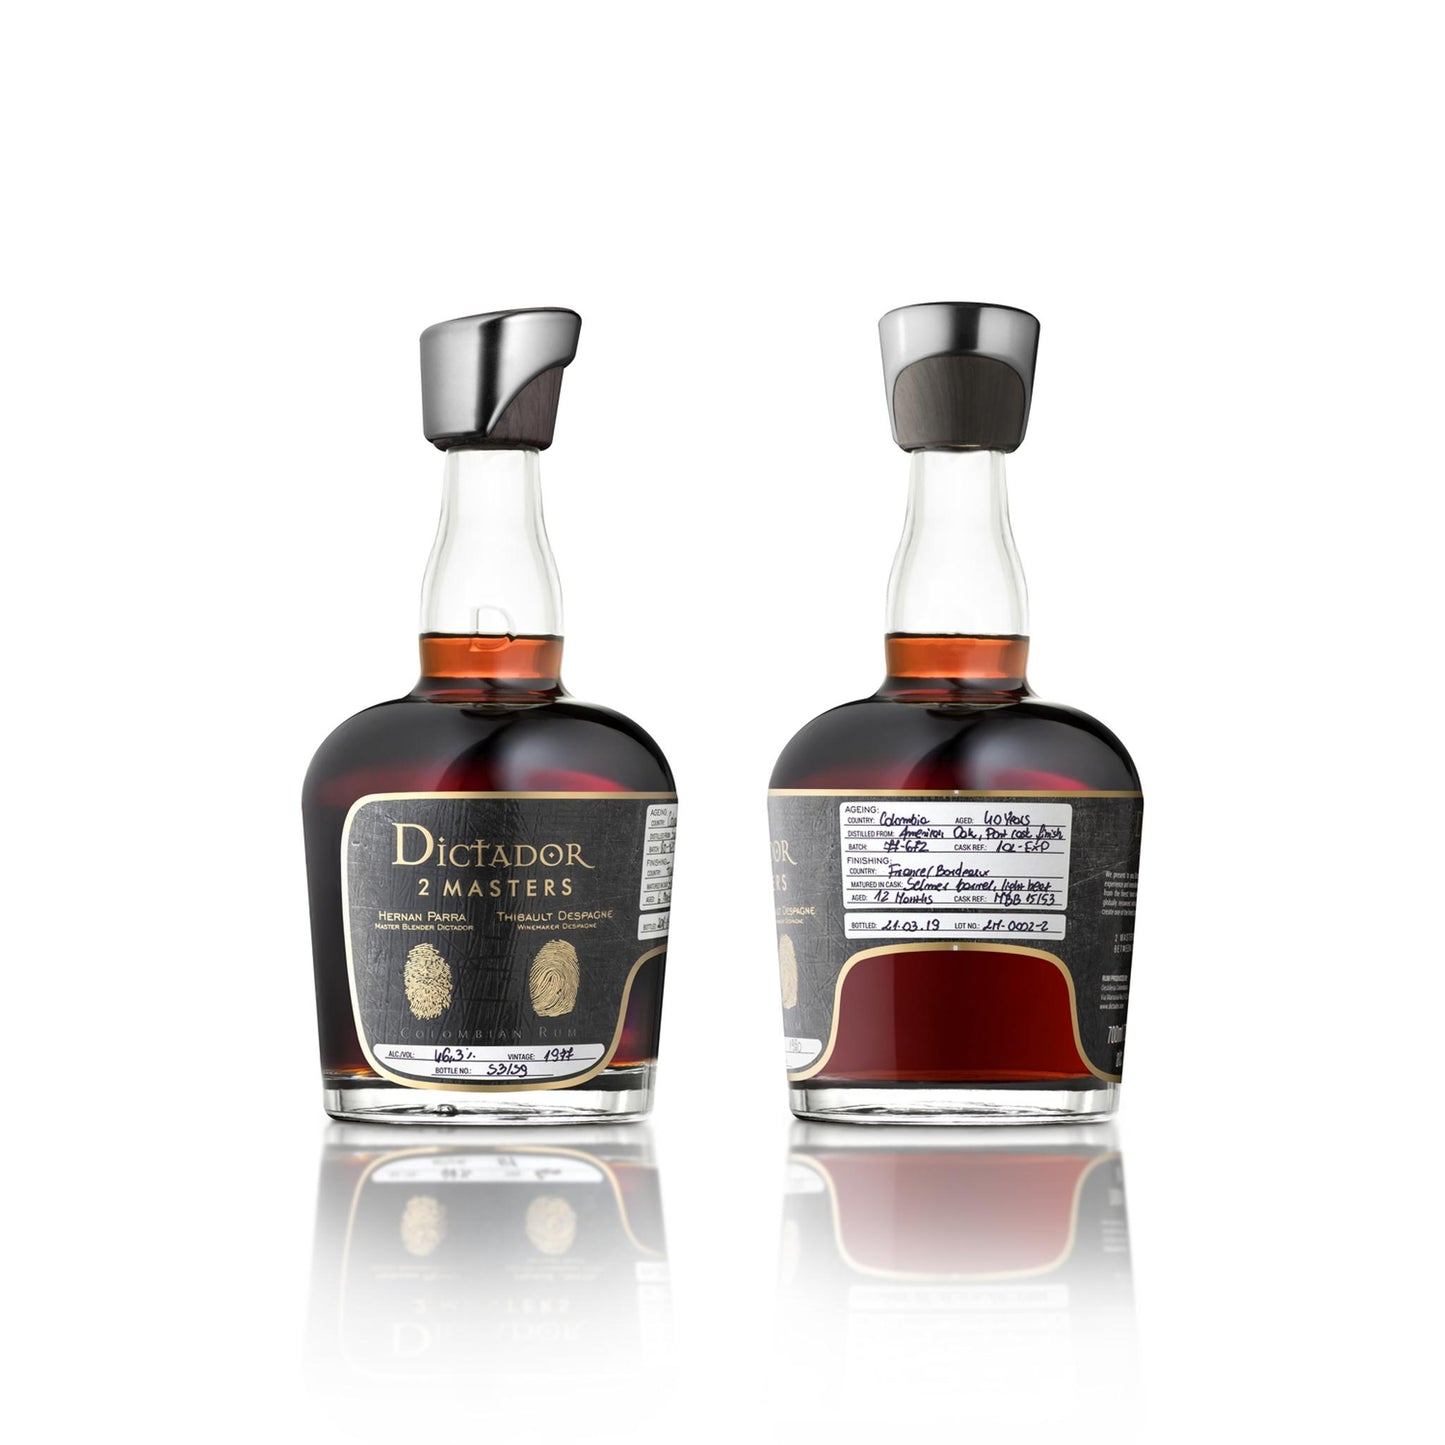 Dictador Aged Rum 2 Masters Despagne Bordeaux - Liquor Geeks